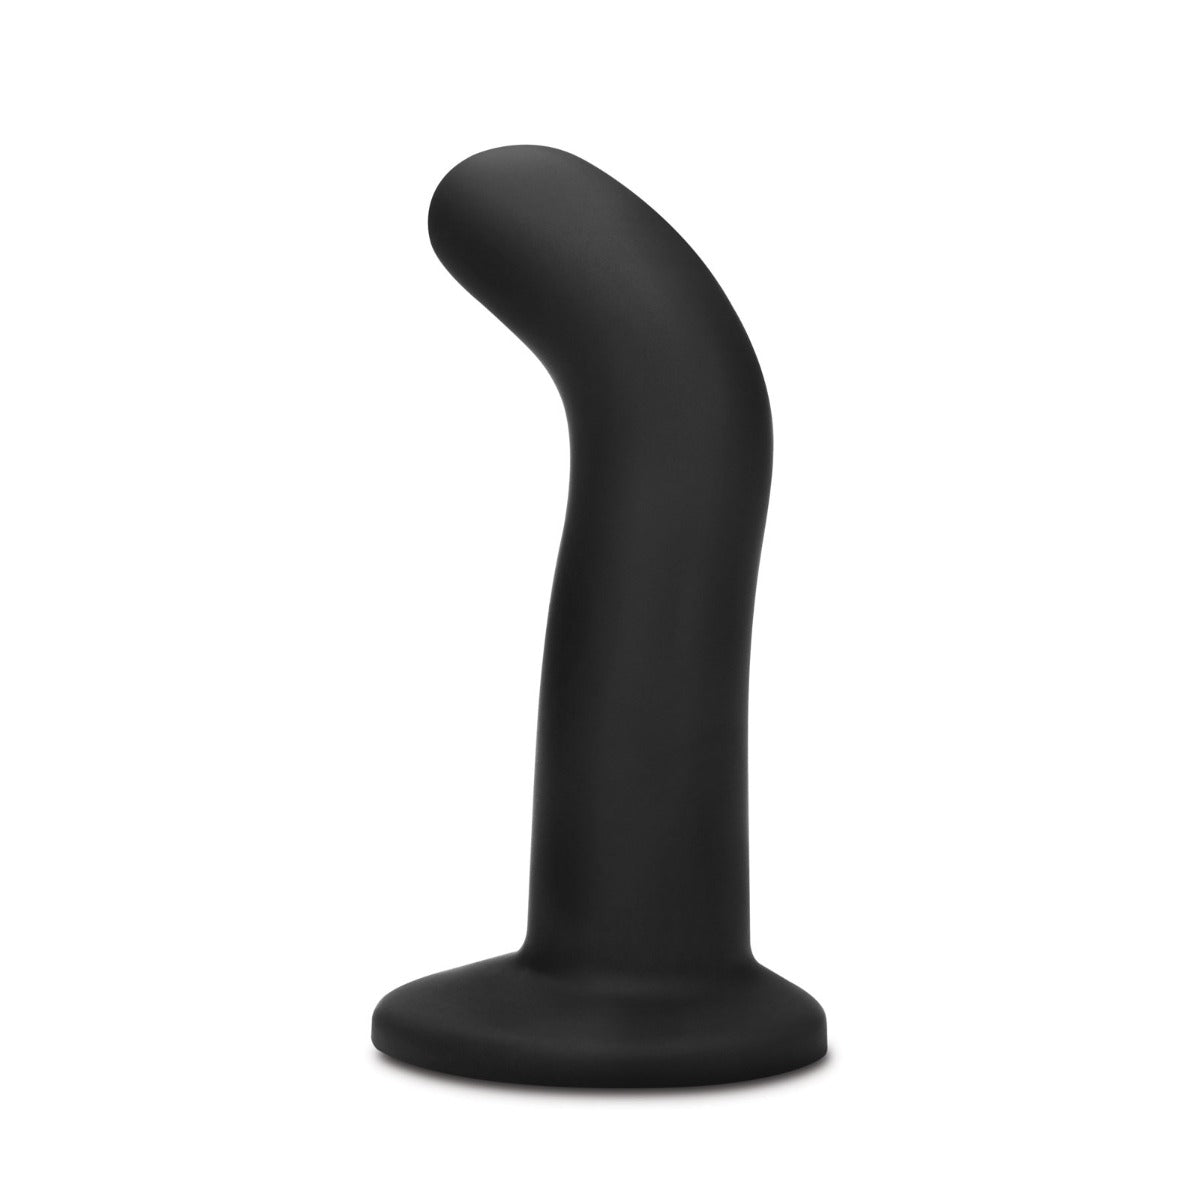 Whipsmart 5.5 inches Remote Control Vibrating Dildo | Black